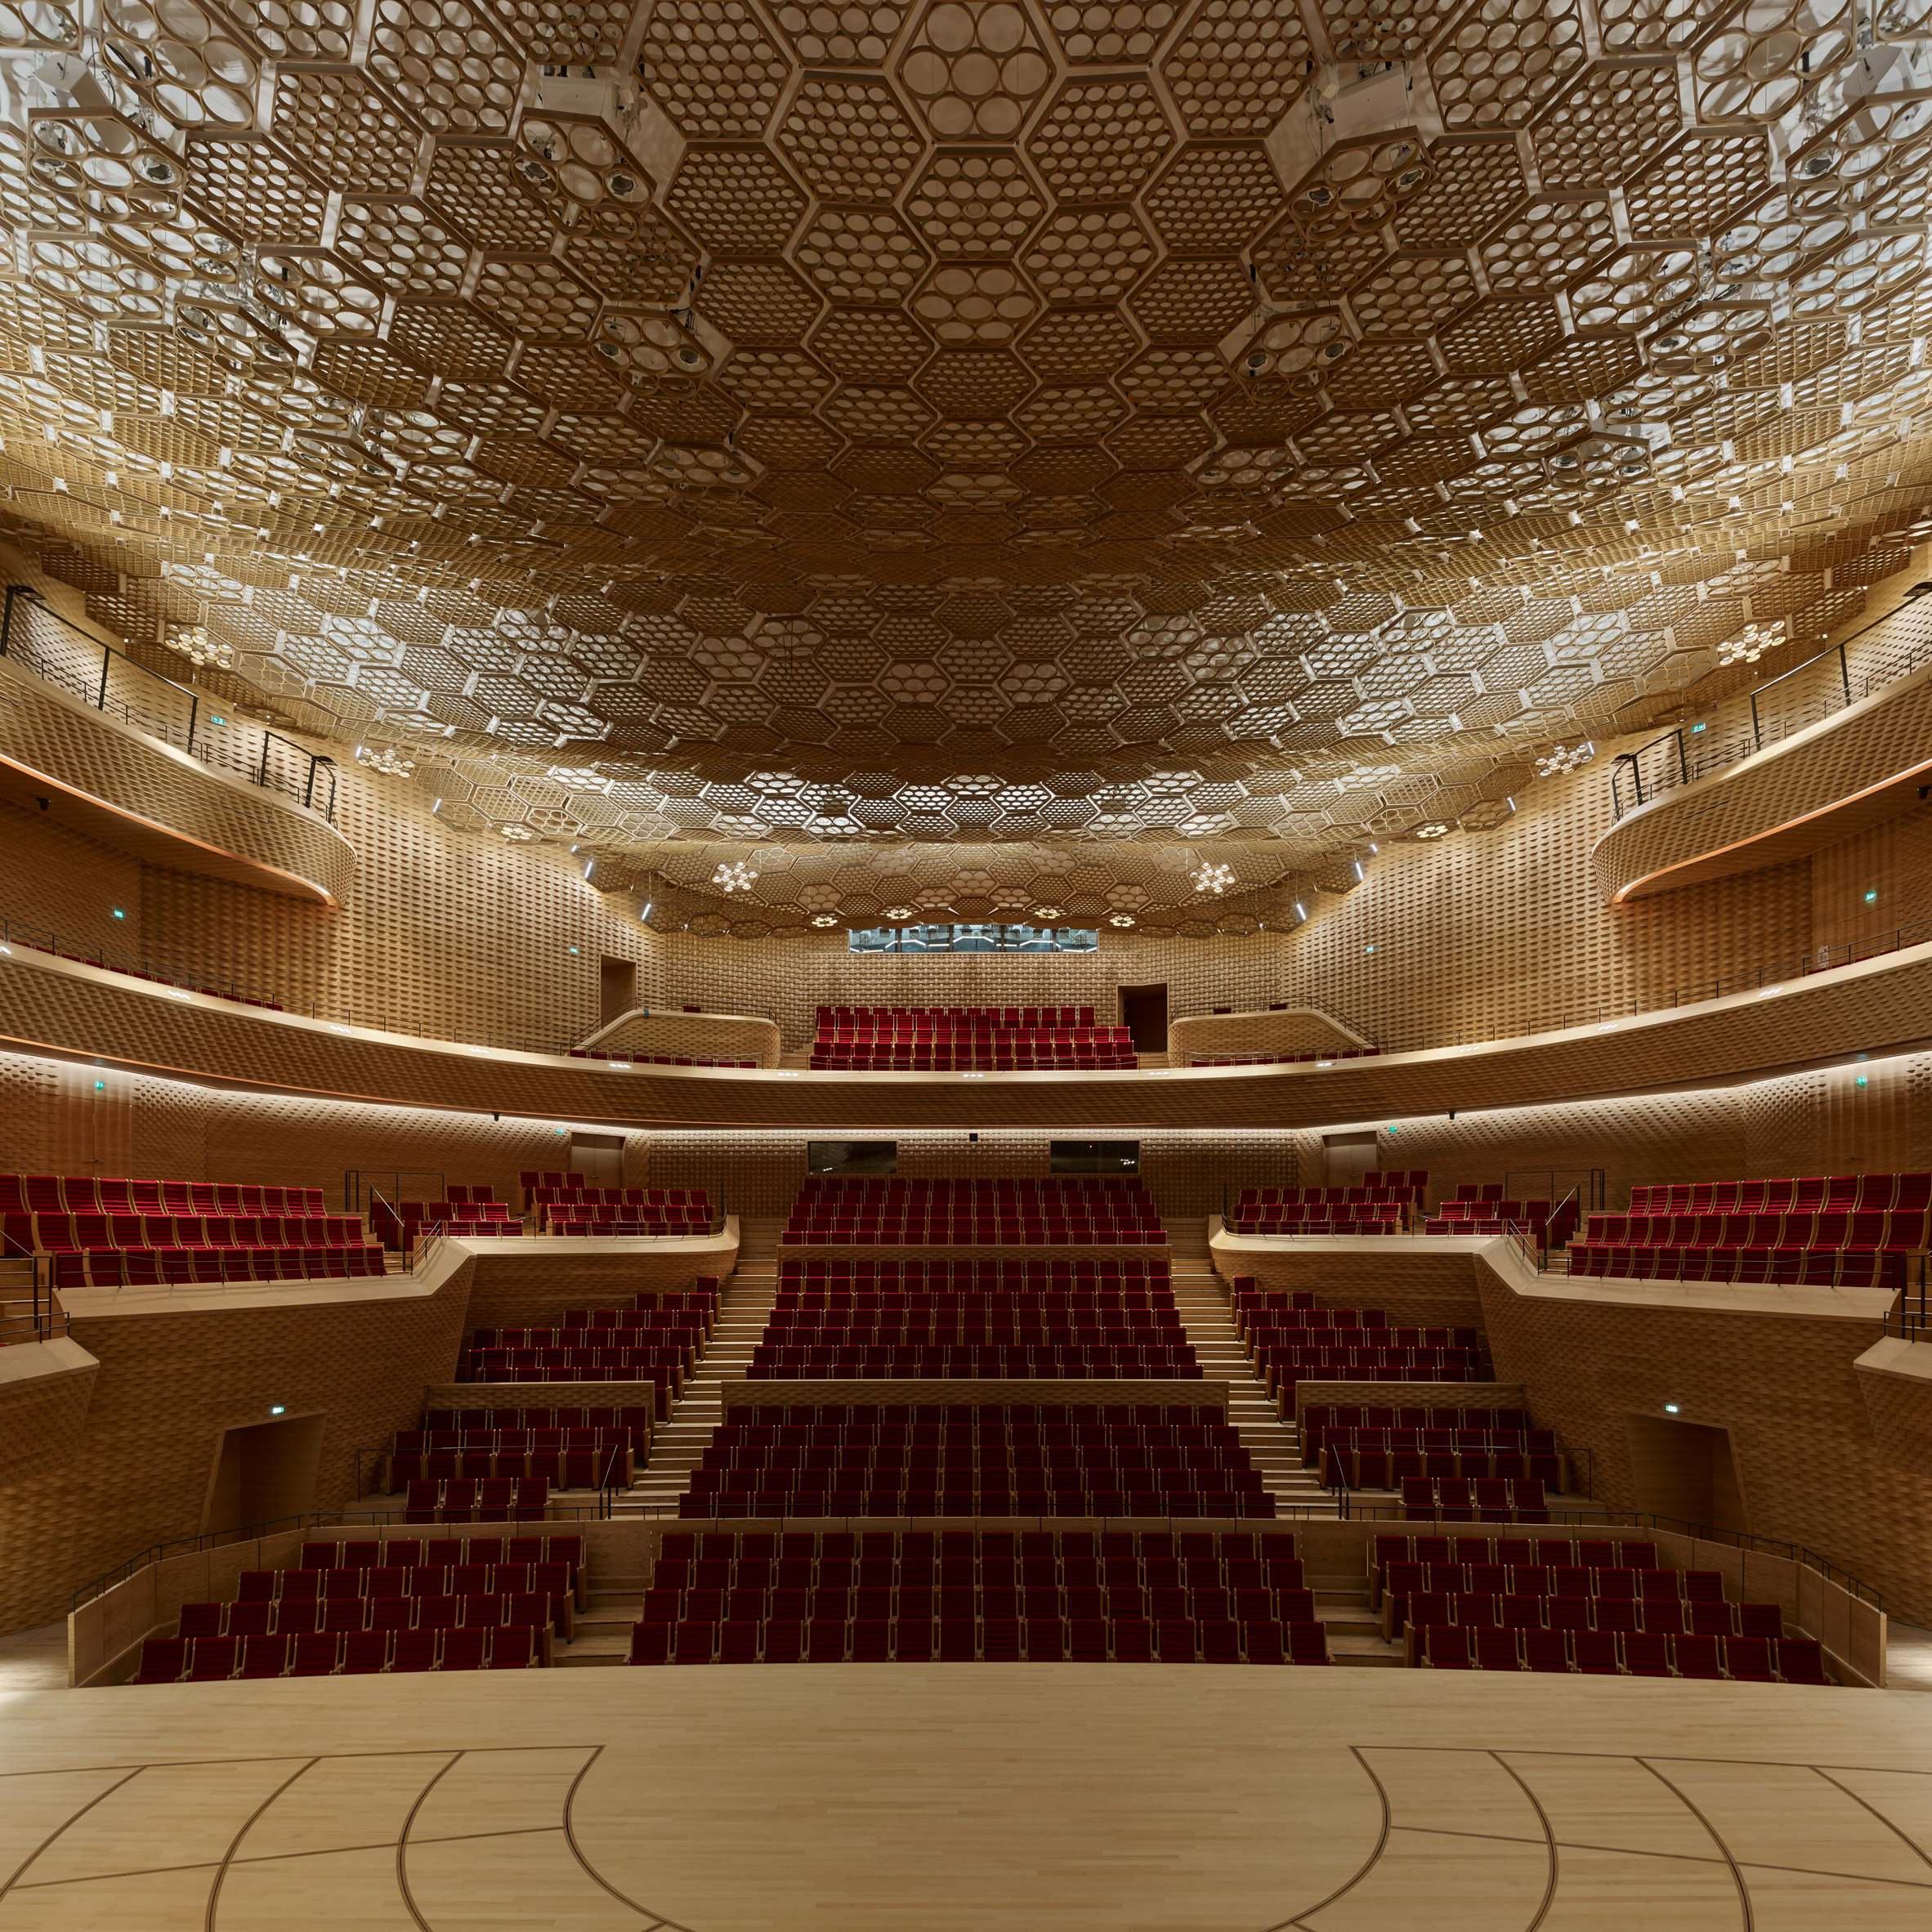 Interior of the auditorium of Shigeru Ban's La Seine Musicale complex